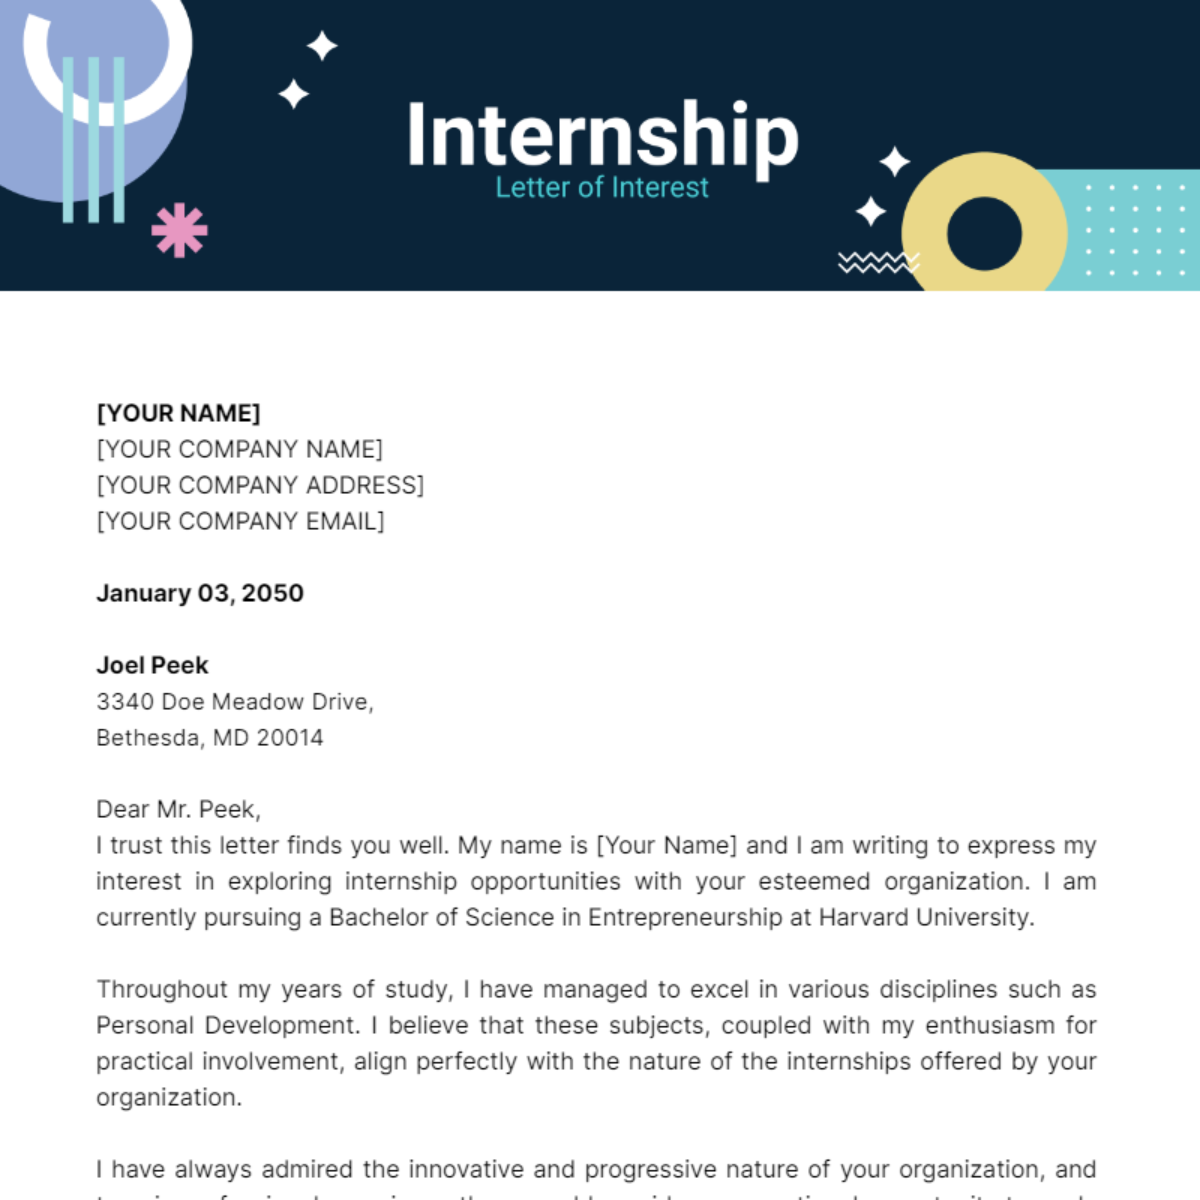 Internship Letter of Interest Template